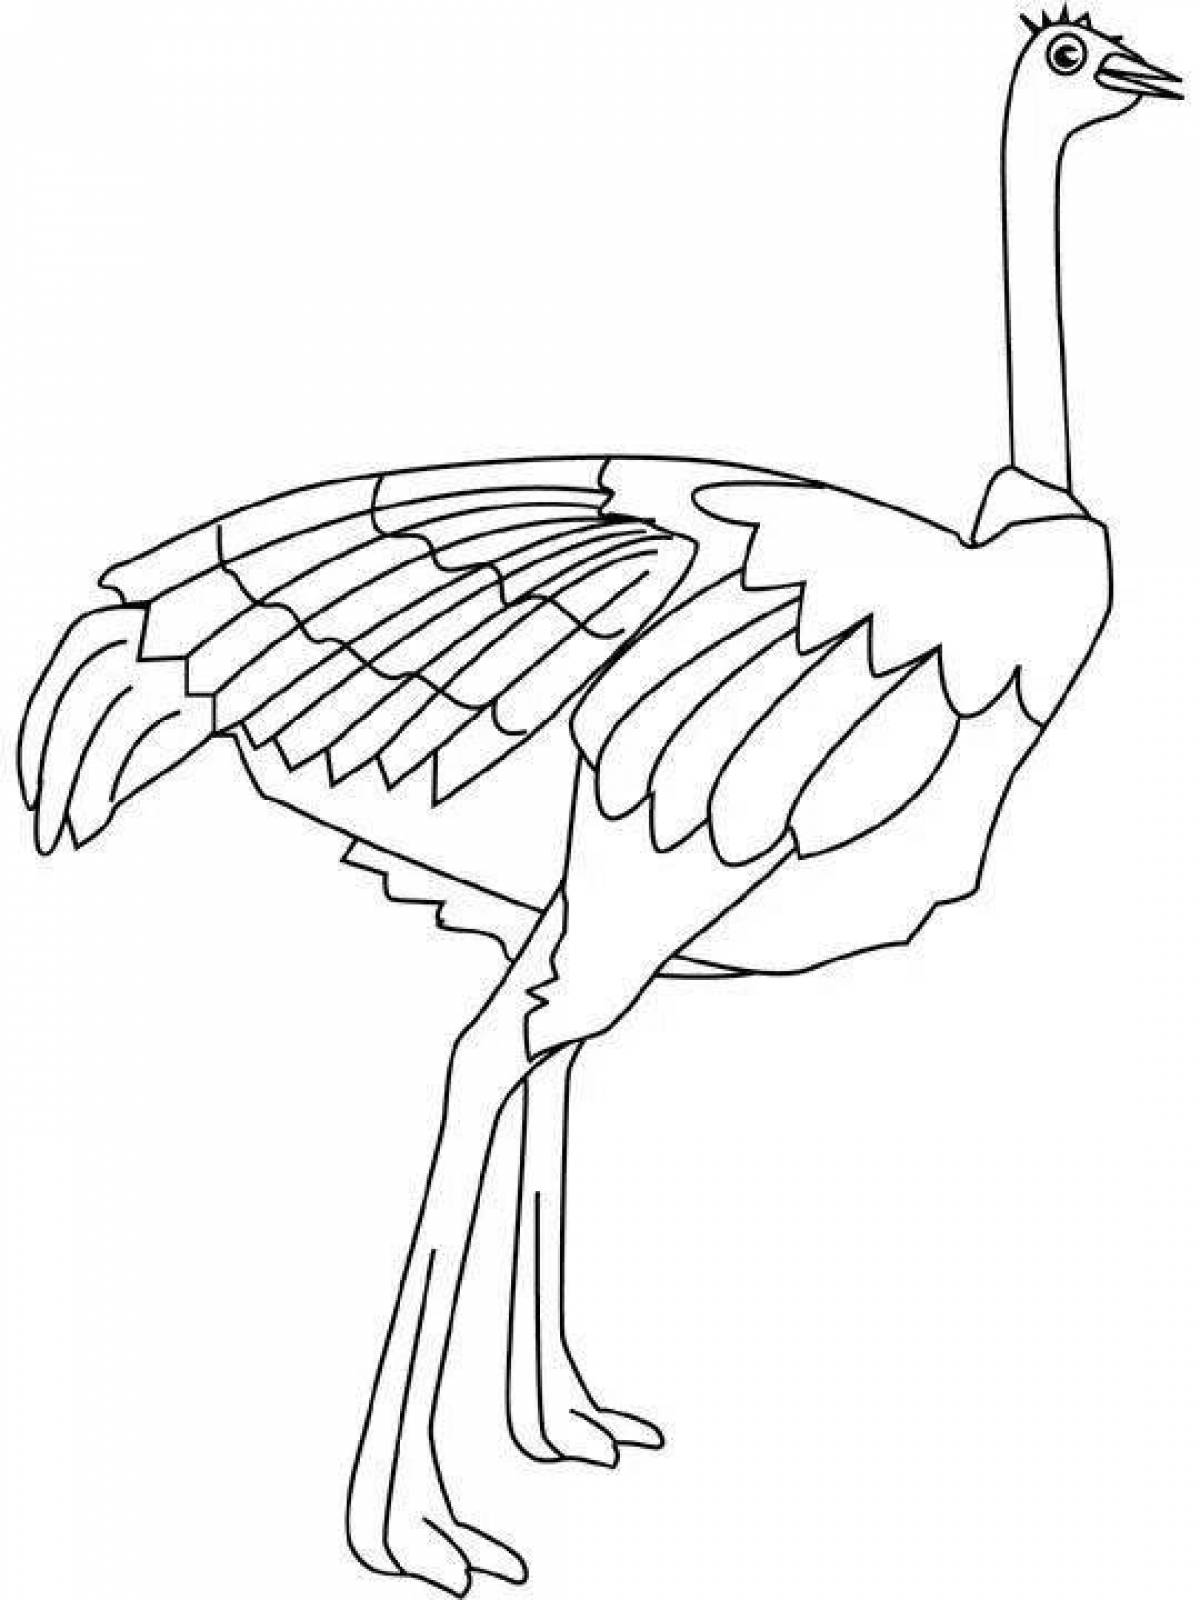 Птица Дрофа раскраска для детей